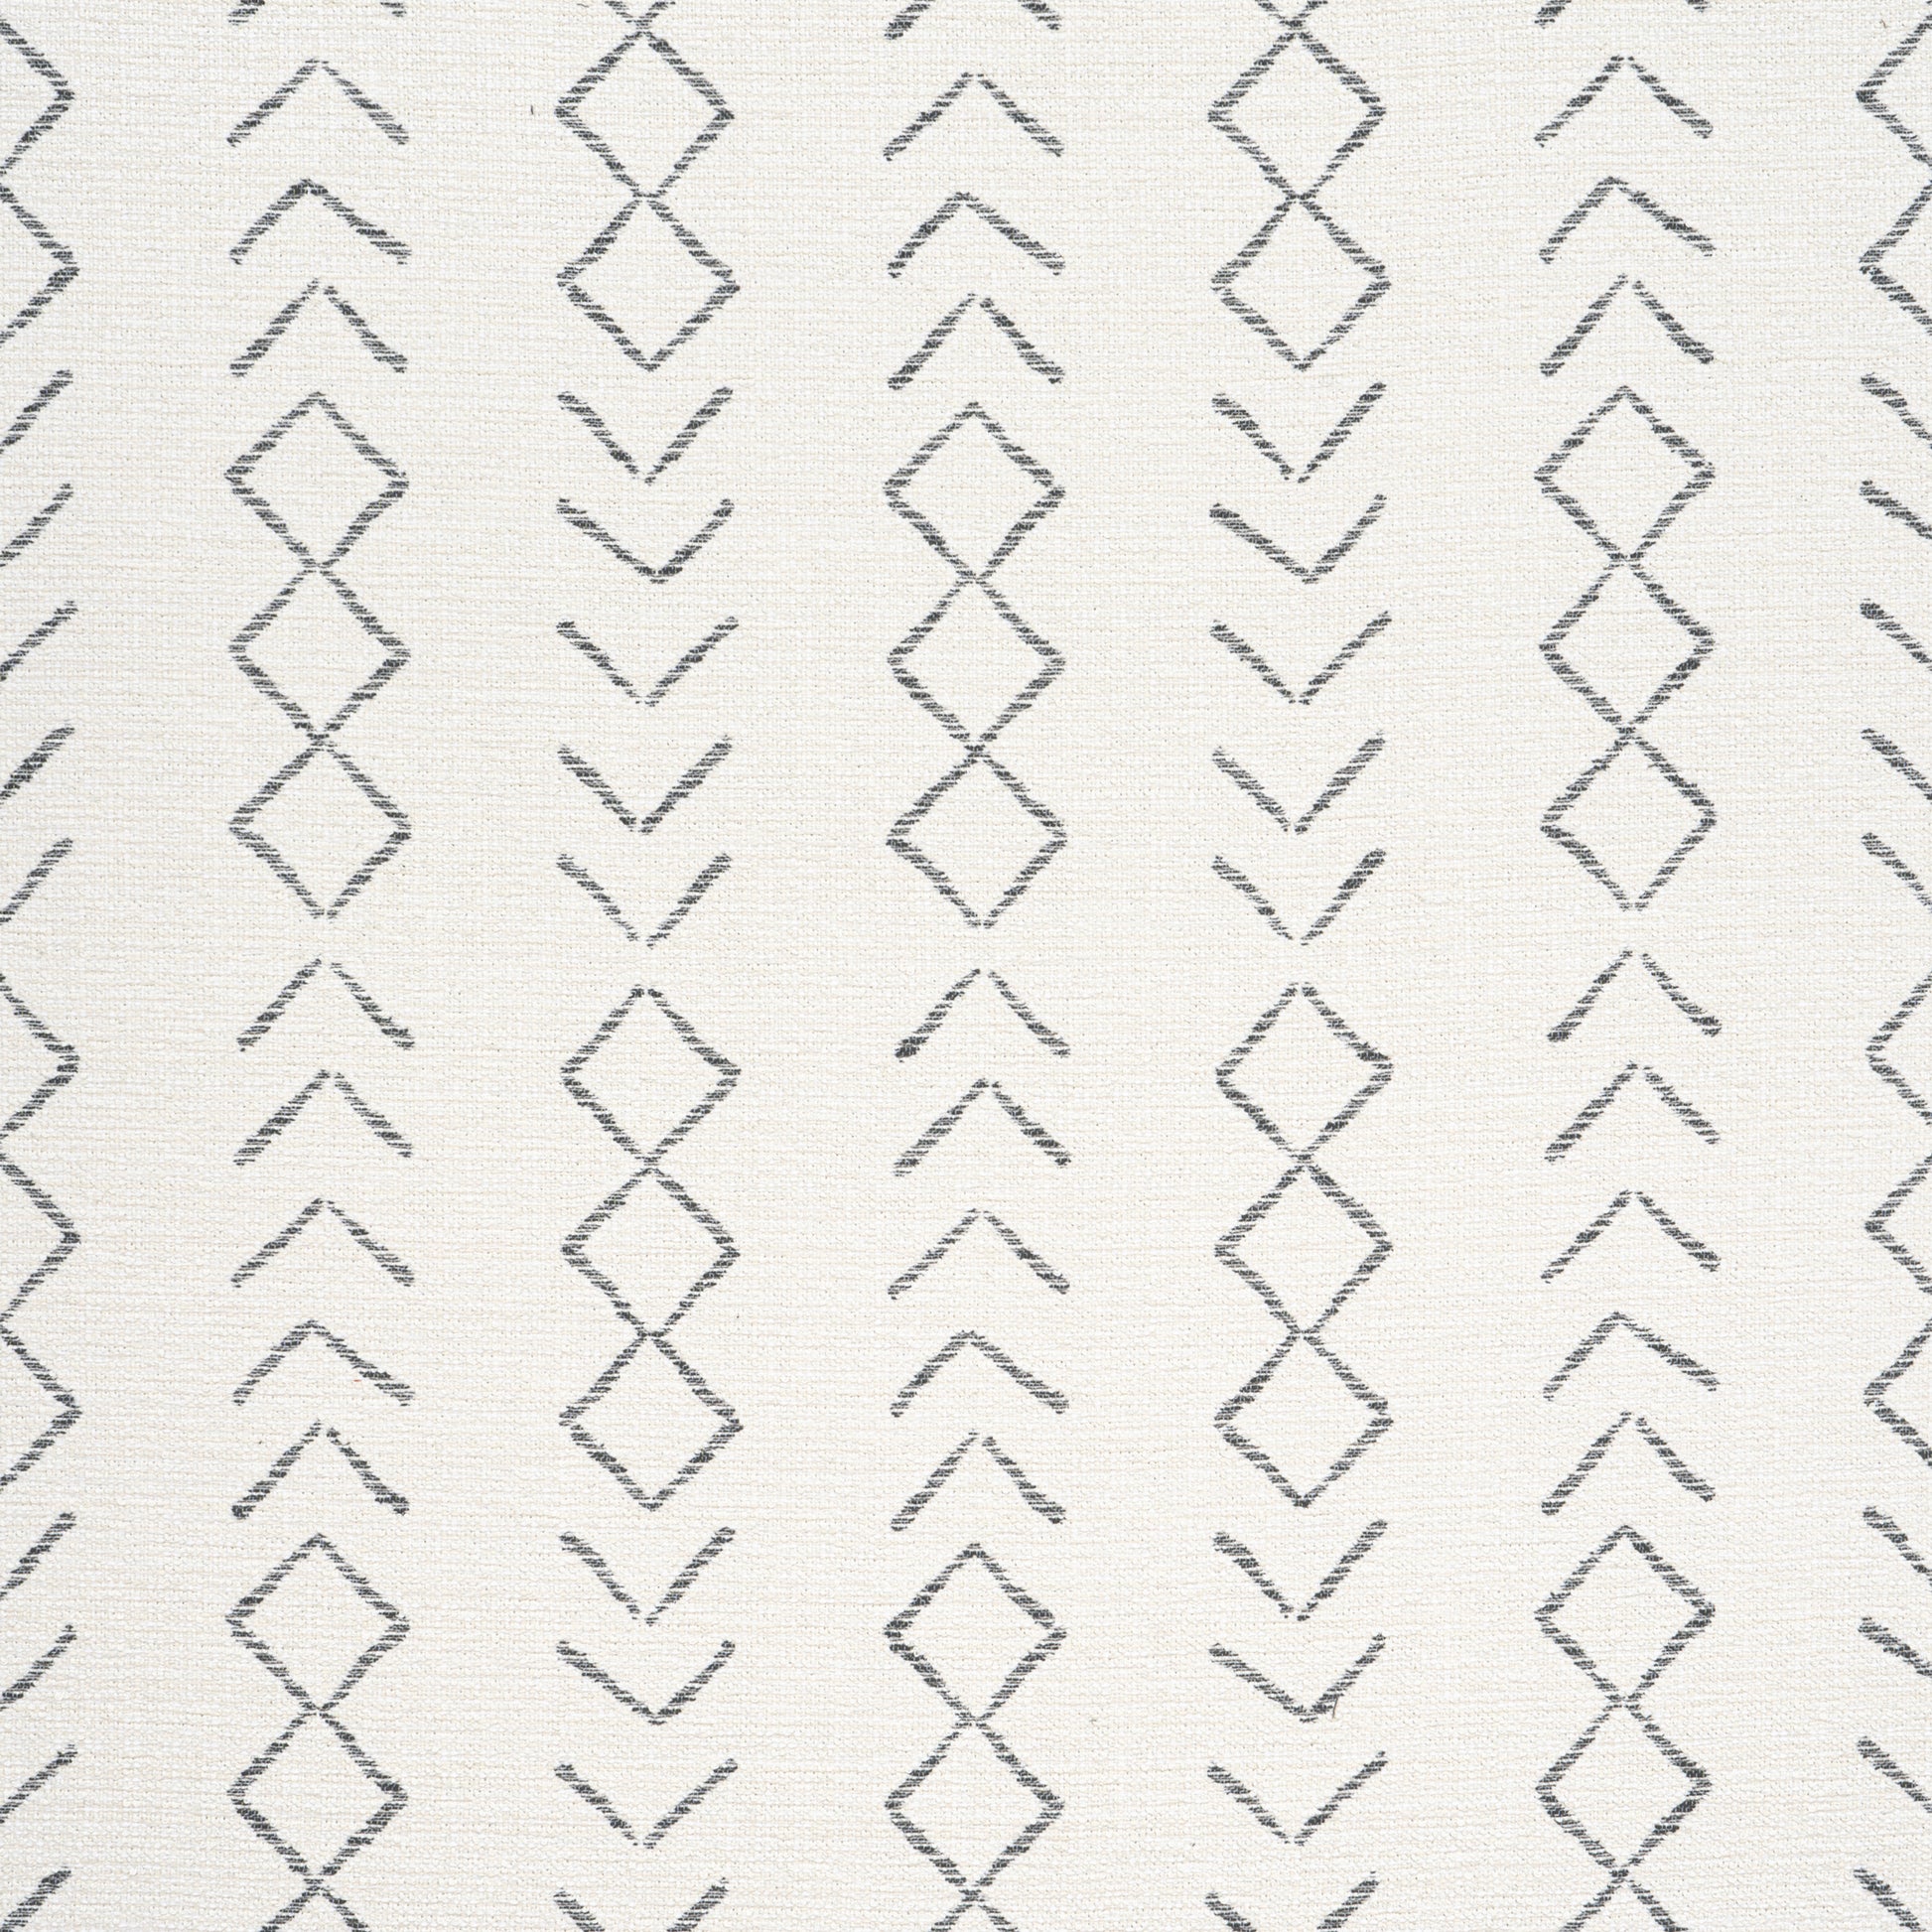 Purchase Thibaut Fabric Product W78363 pattern name Anasazi color Black